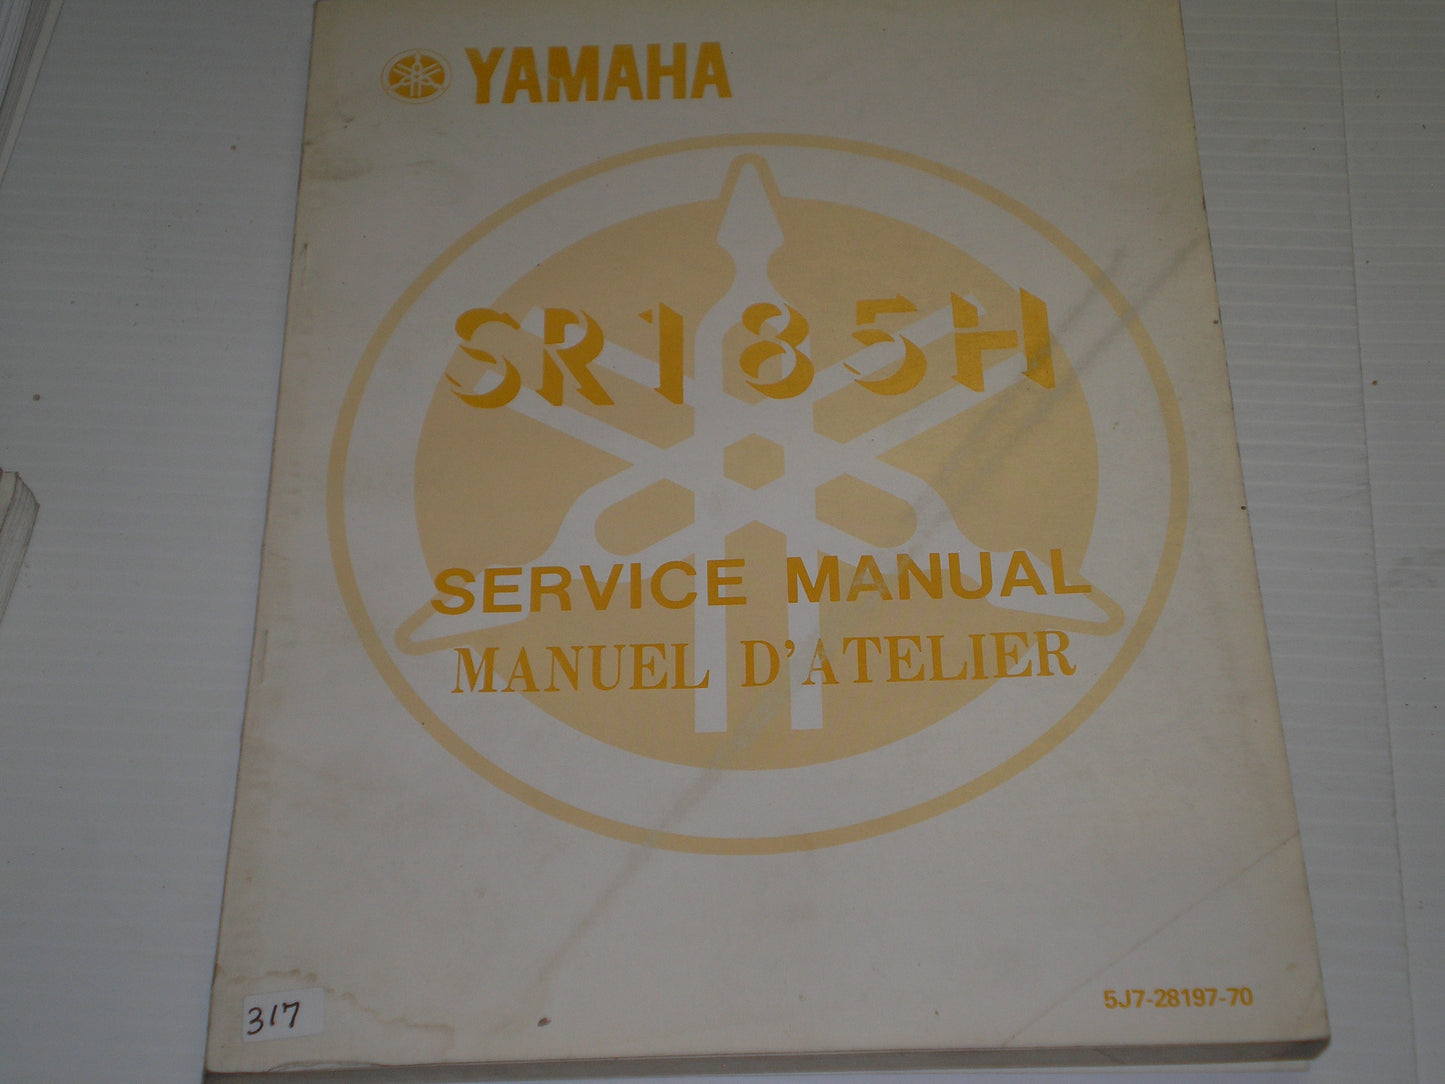 YAMAHA SR185  H 1982  Service Manual  5J7-28197-70  #317